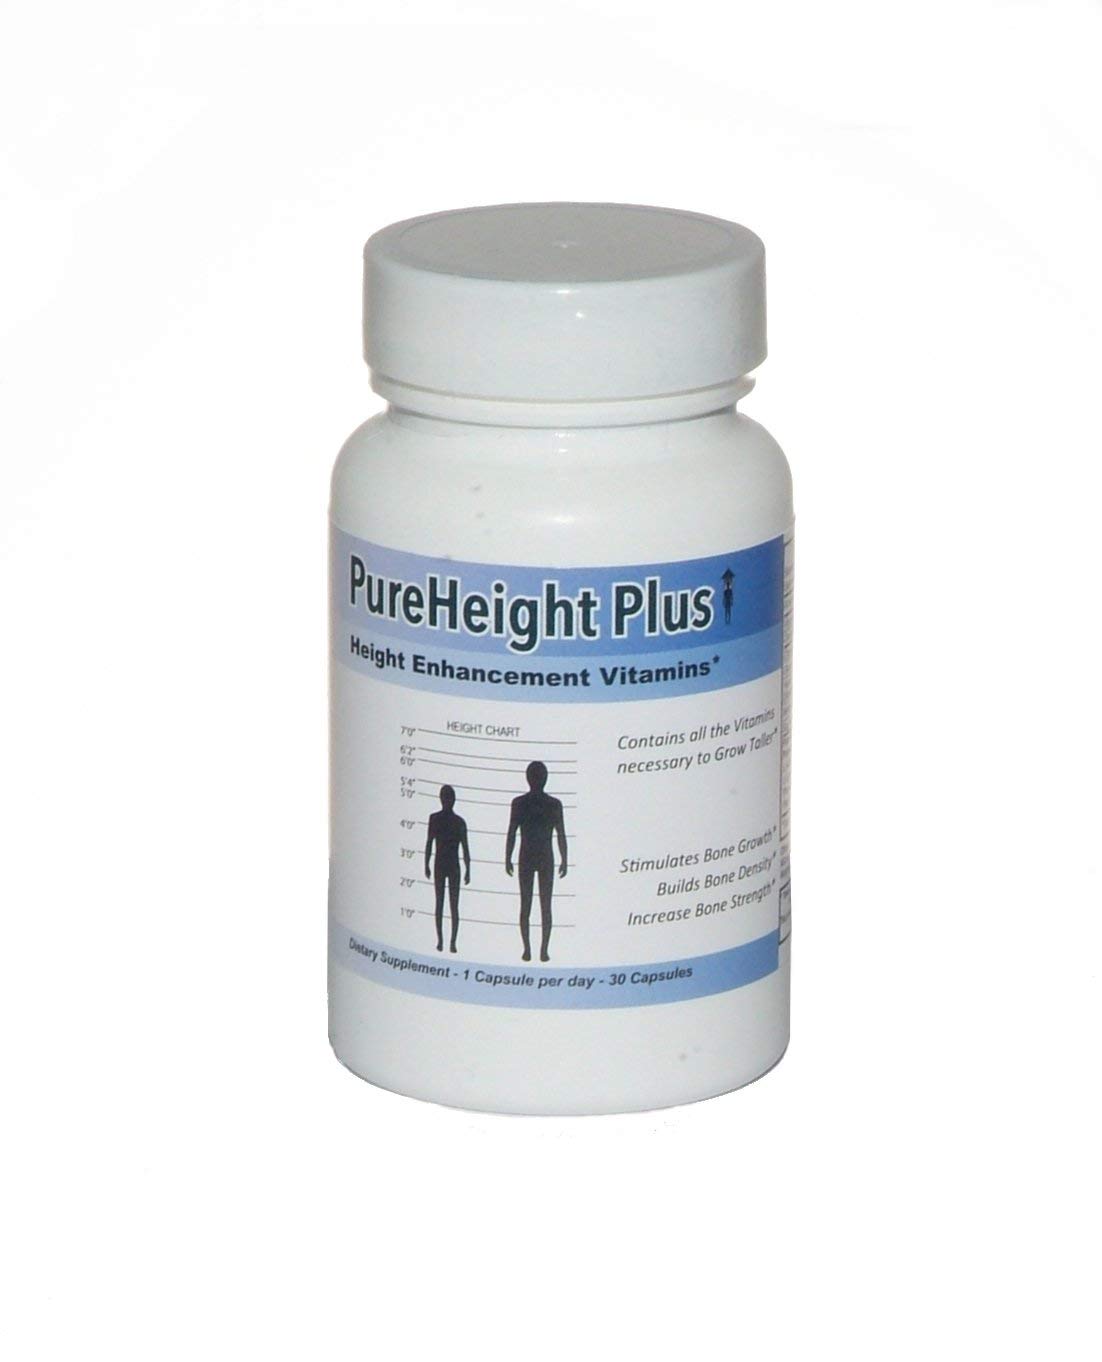 PureHeight Plus Height Enhancement Vitamins.